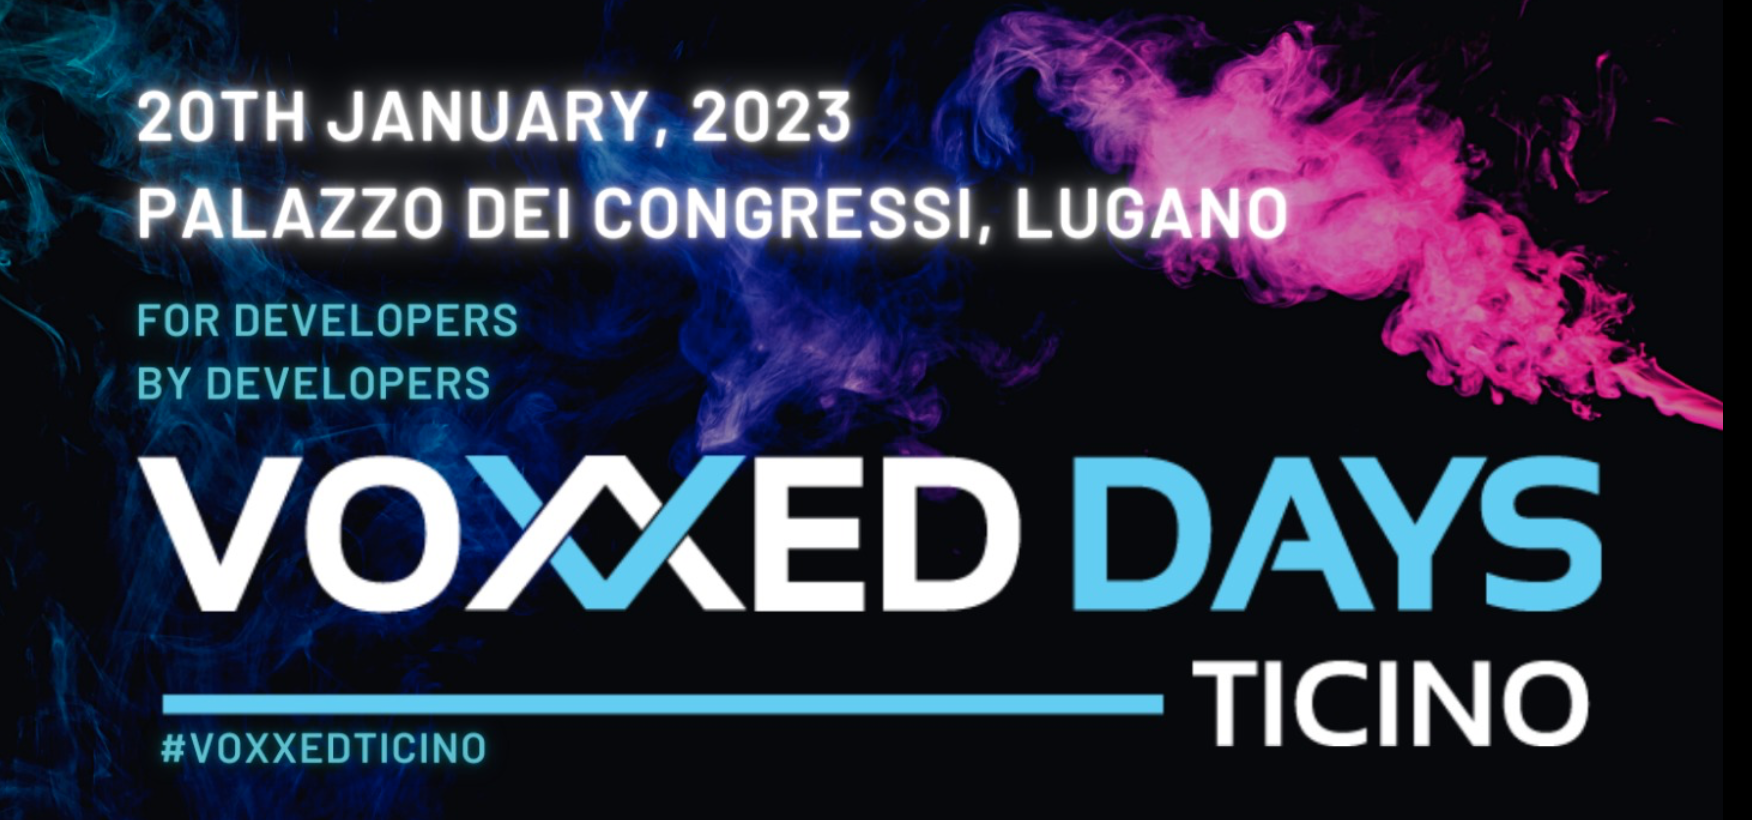 Voxxed Days：2023 年“Voxxed Days Ticino”的海报和标志